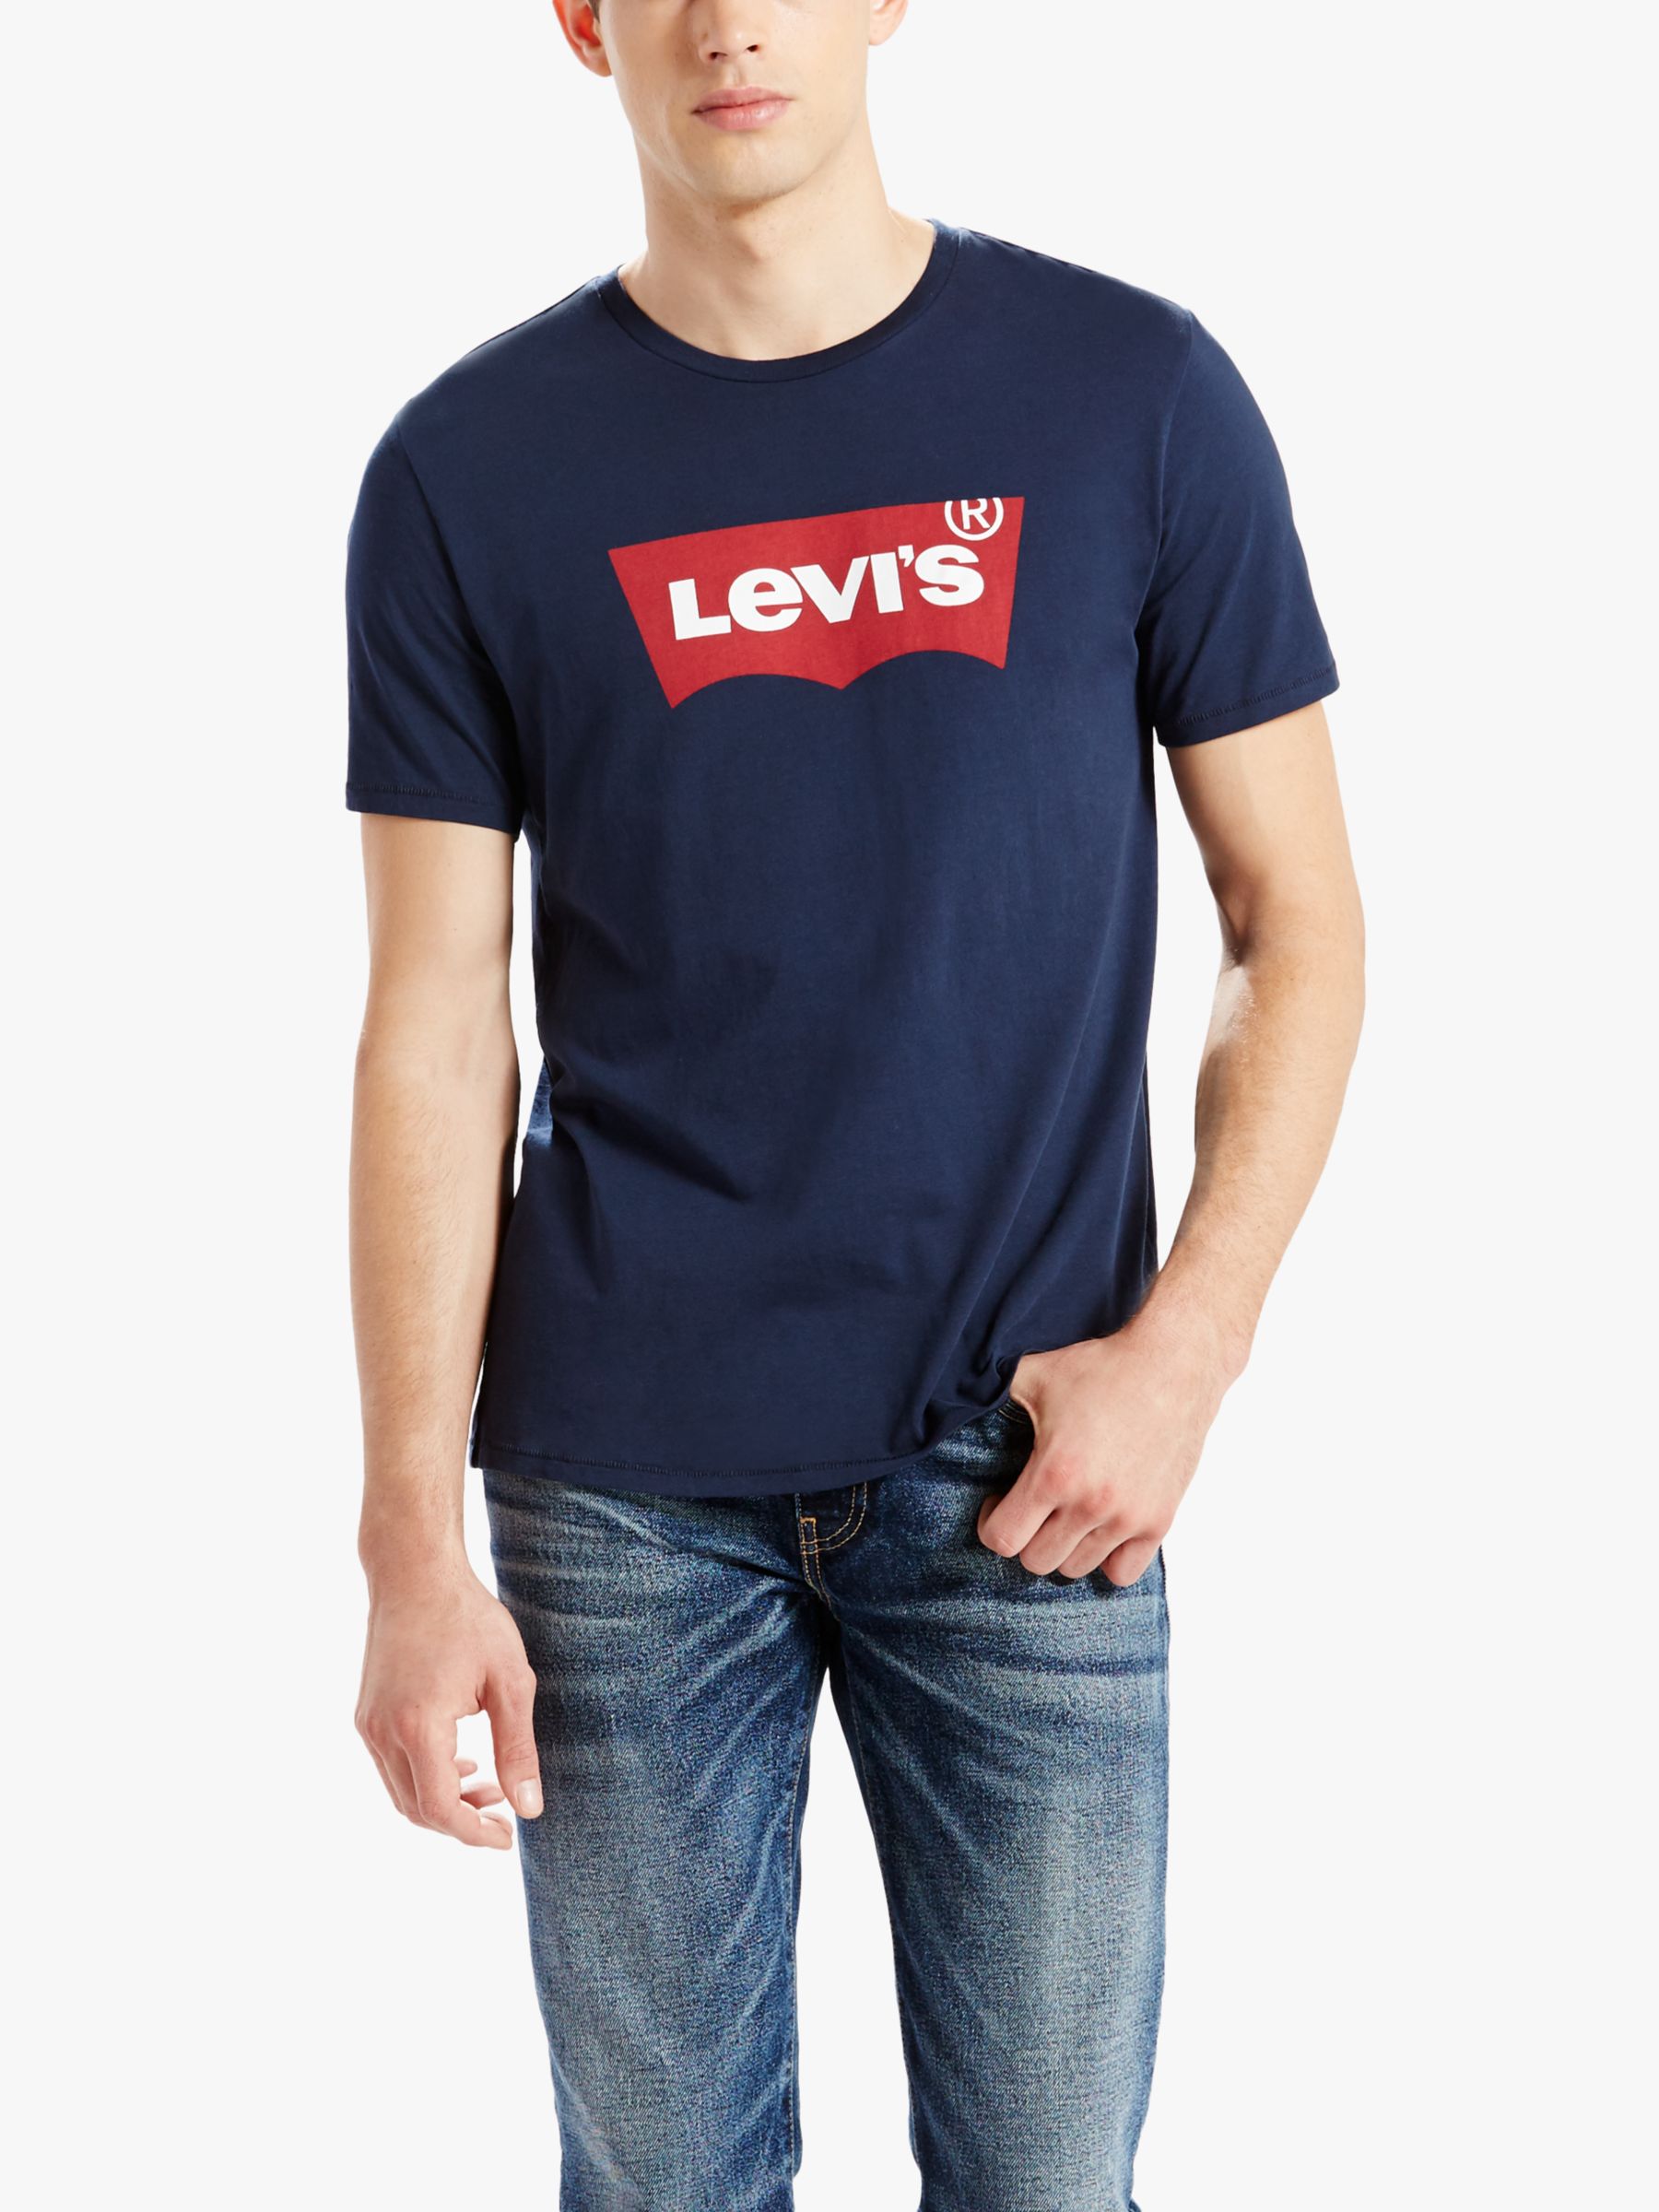 Levi's Batwing Graphic Logo T-Shirt, Dress Blues, S